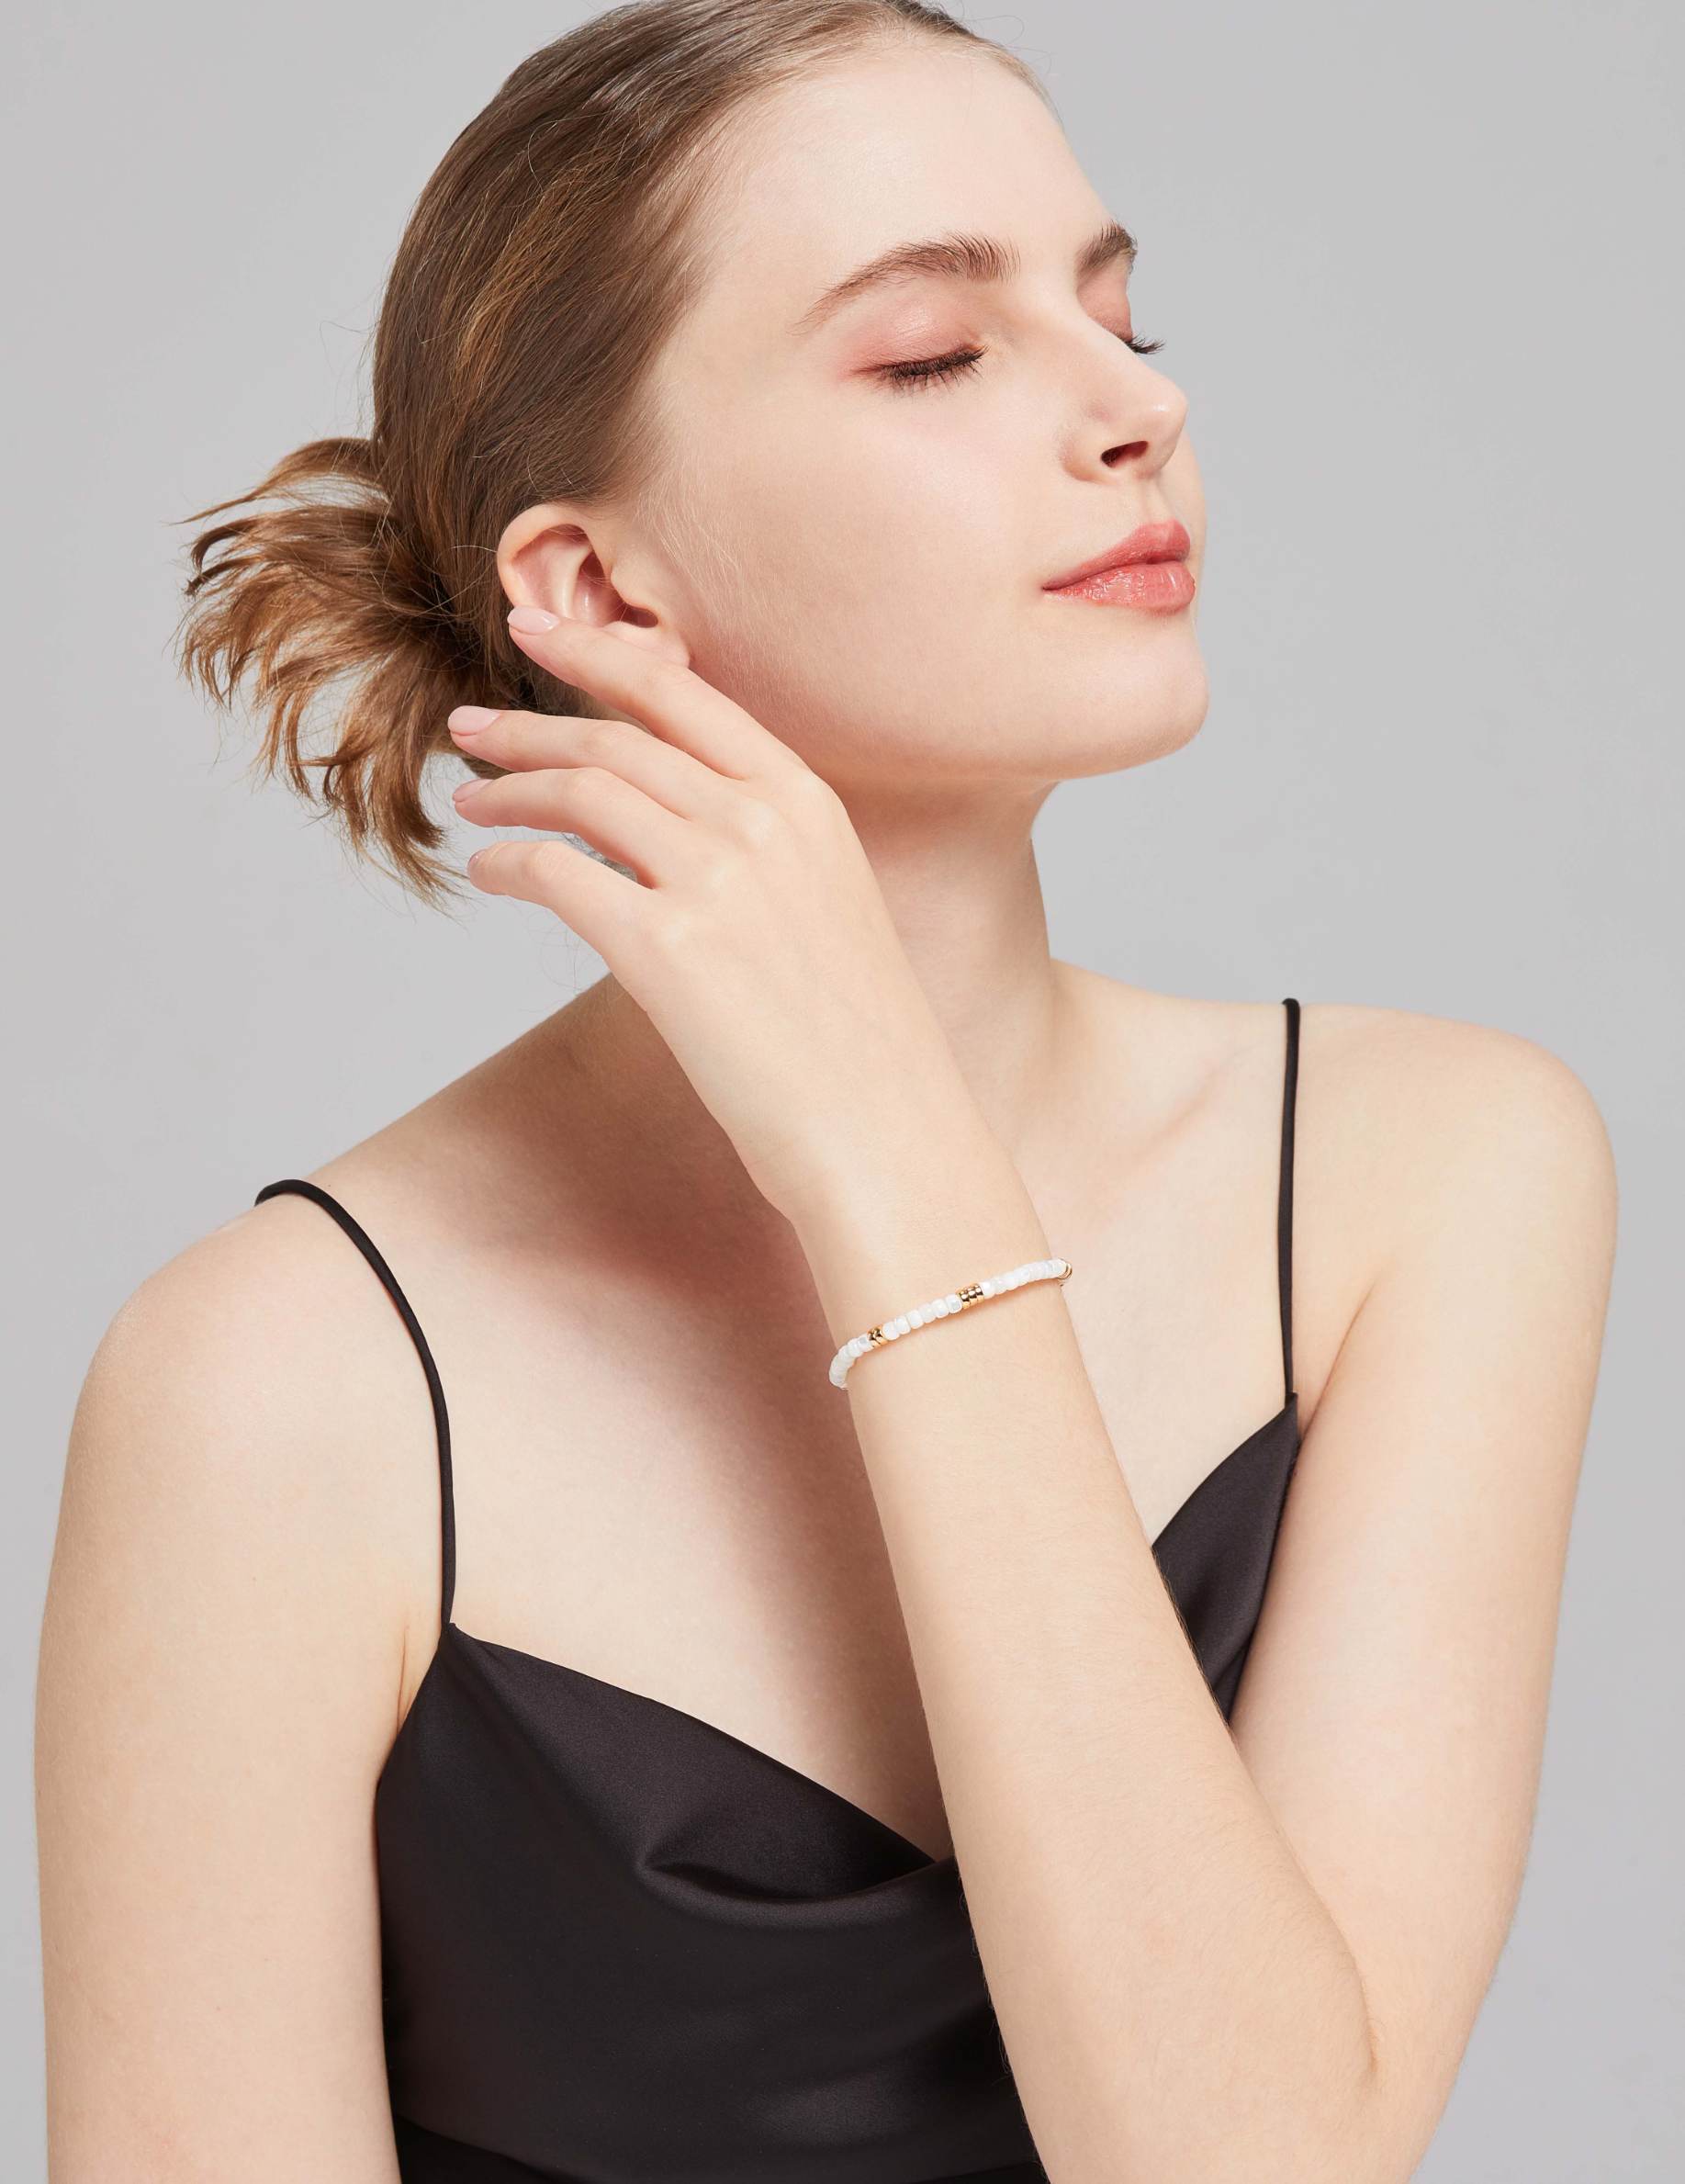 Dovis Jewelry's Silver Chain Bracelets for Women: Timeless Elegance